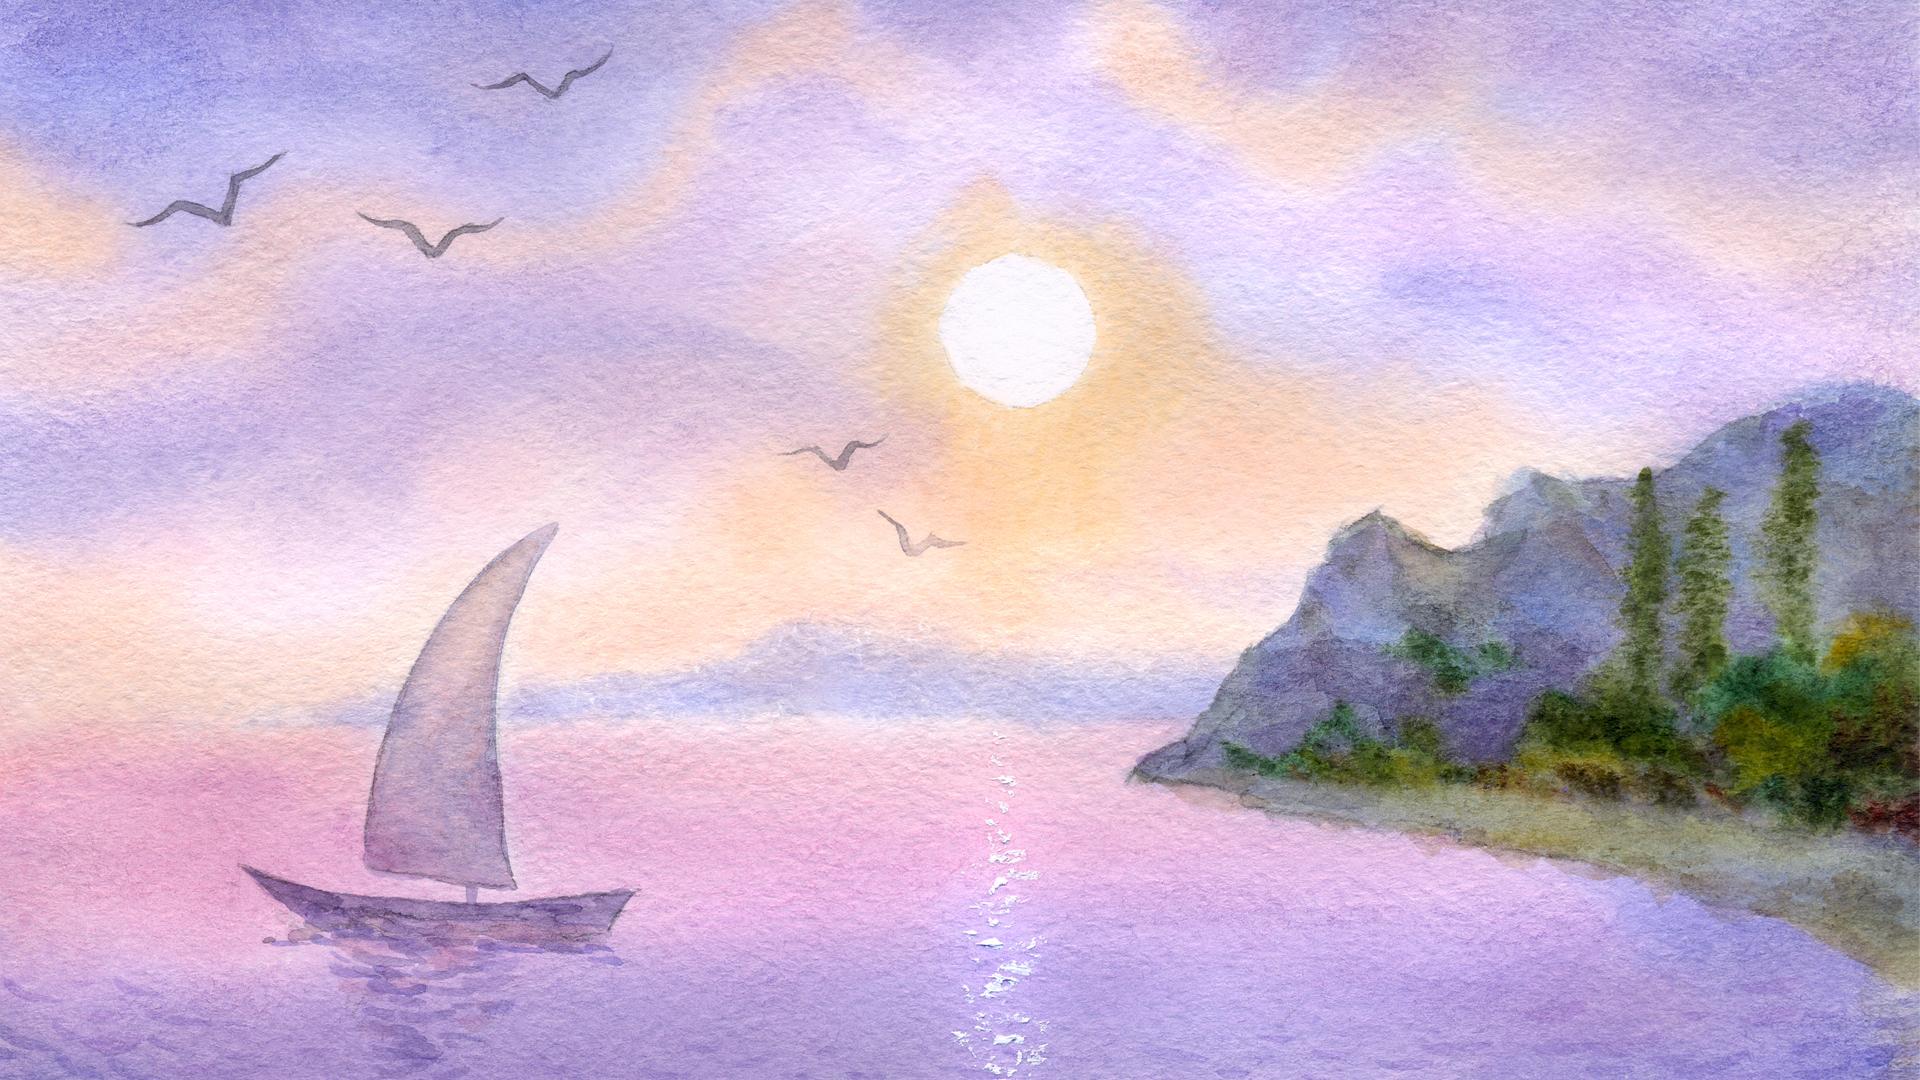 Watercolor Backgrounds Free | PixelsTalk.Net